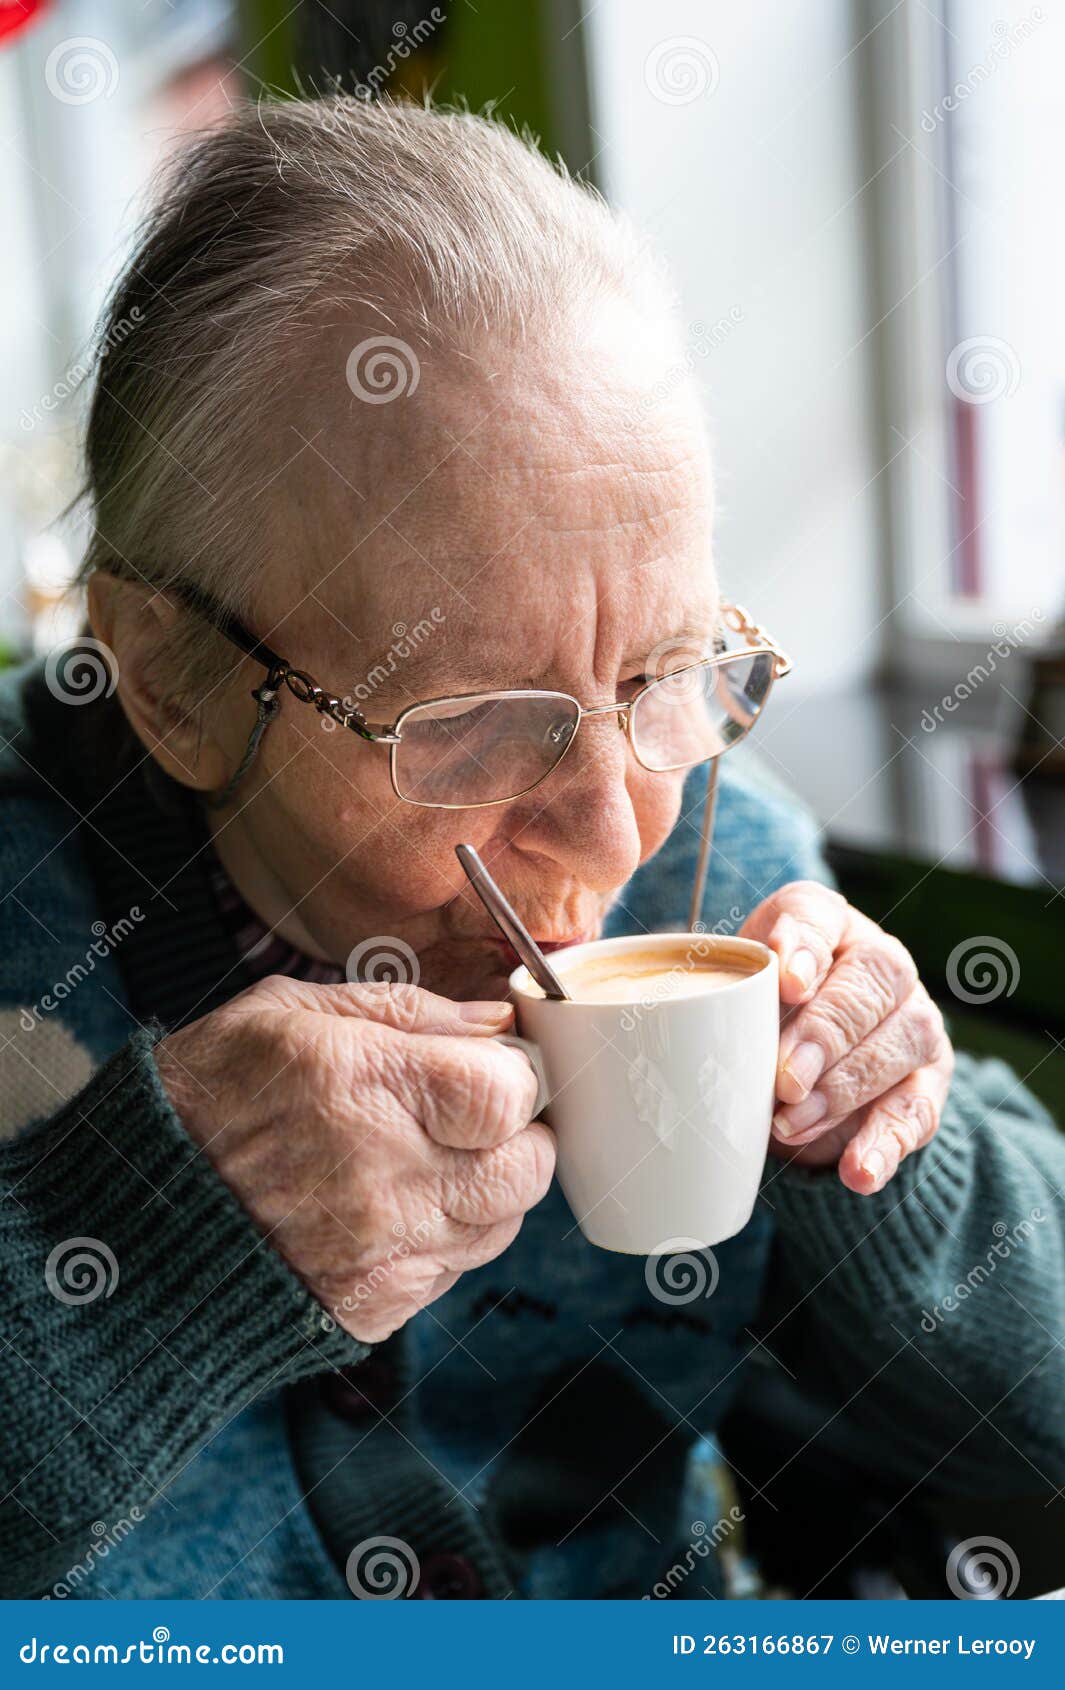 84 yo white woman drinking a cup of coffee, tienen, belgium